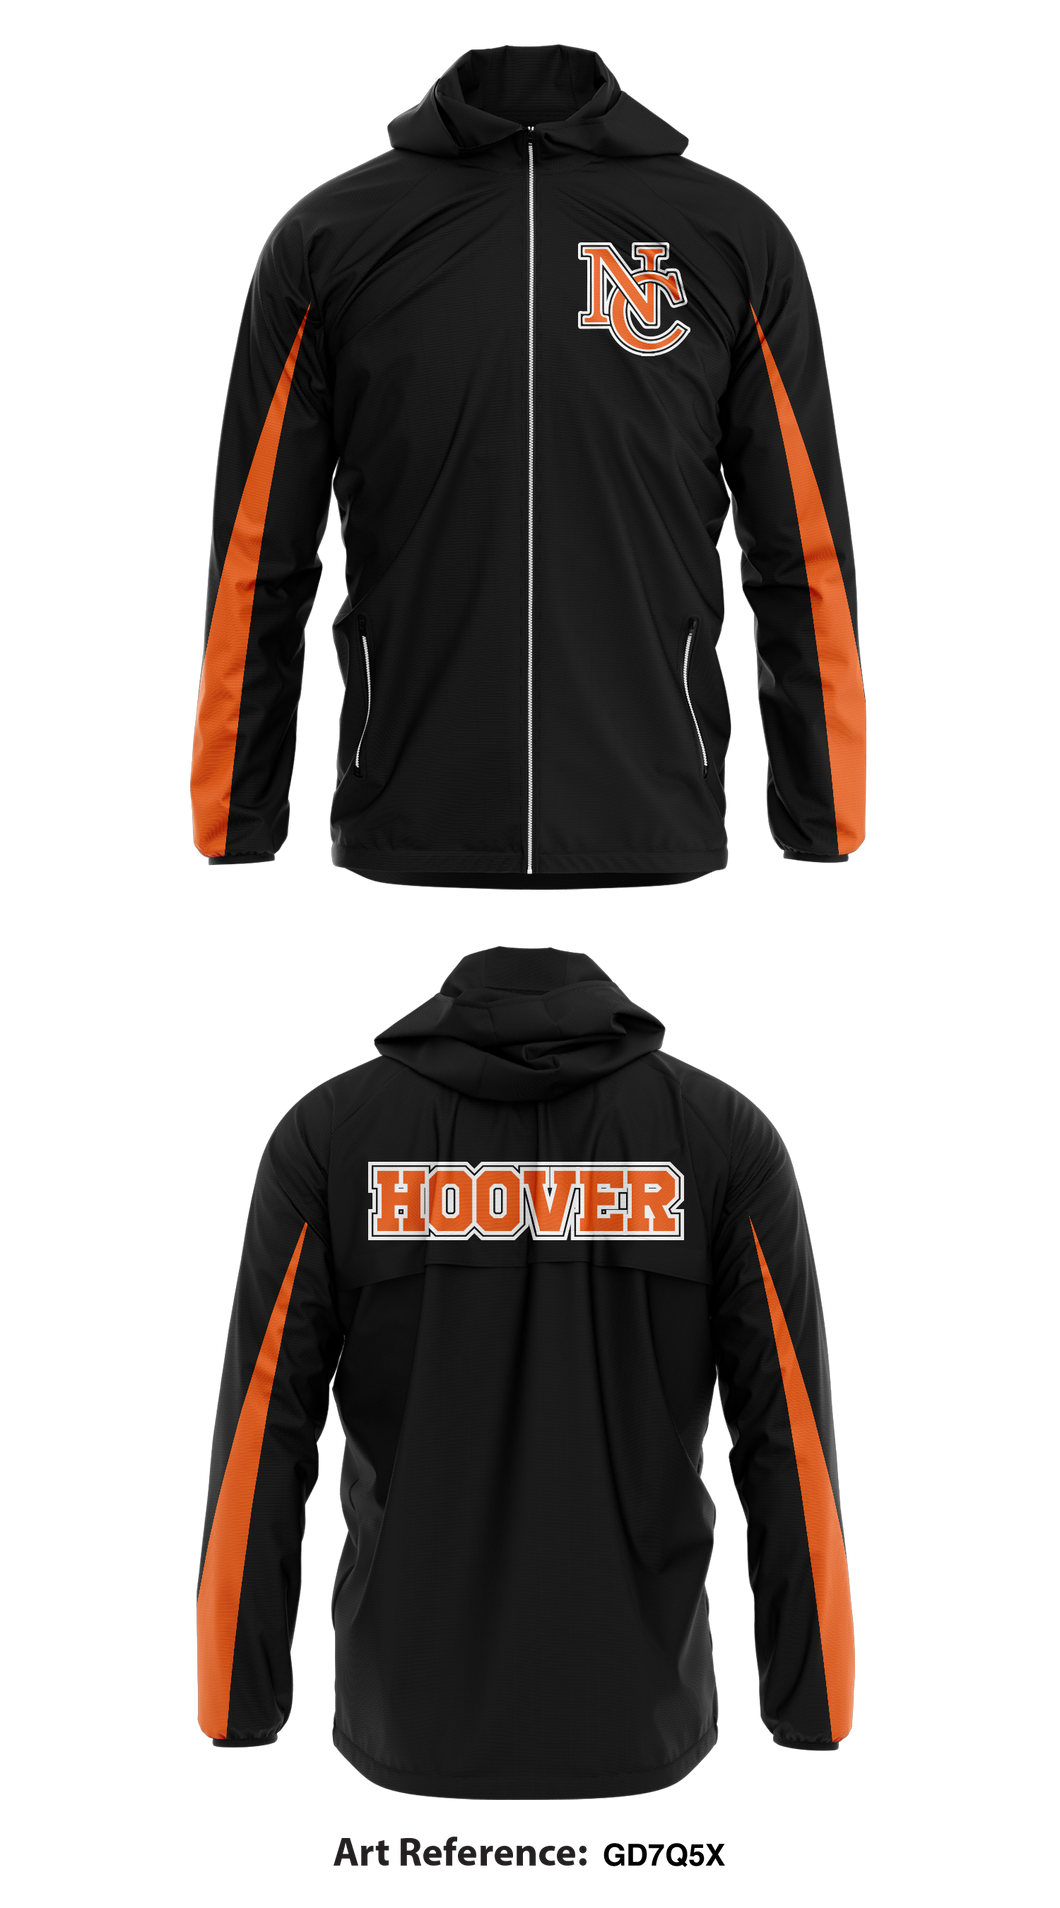 Hoover 12881519 Windbreaker - 1